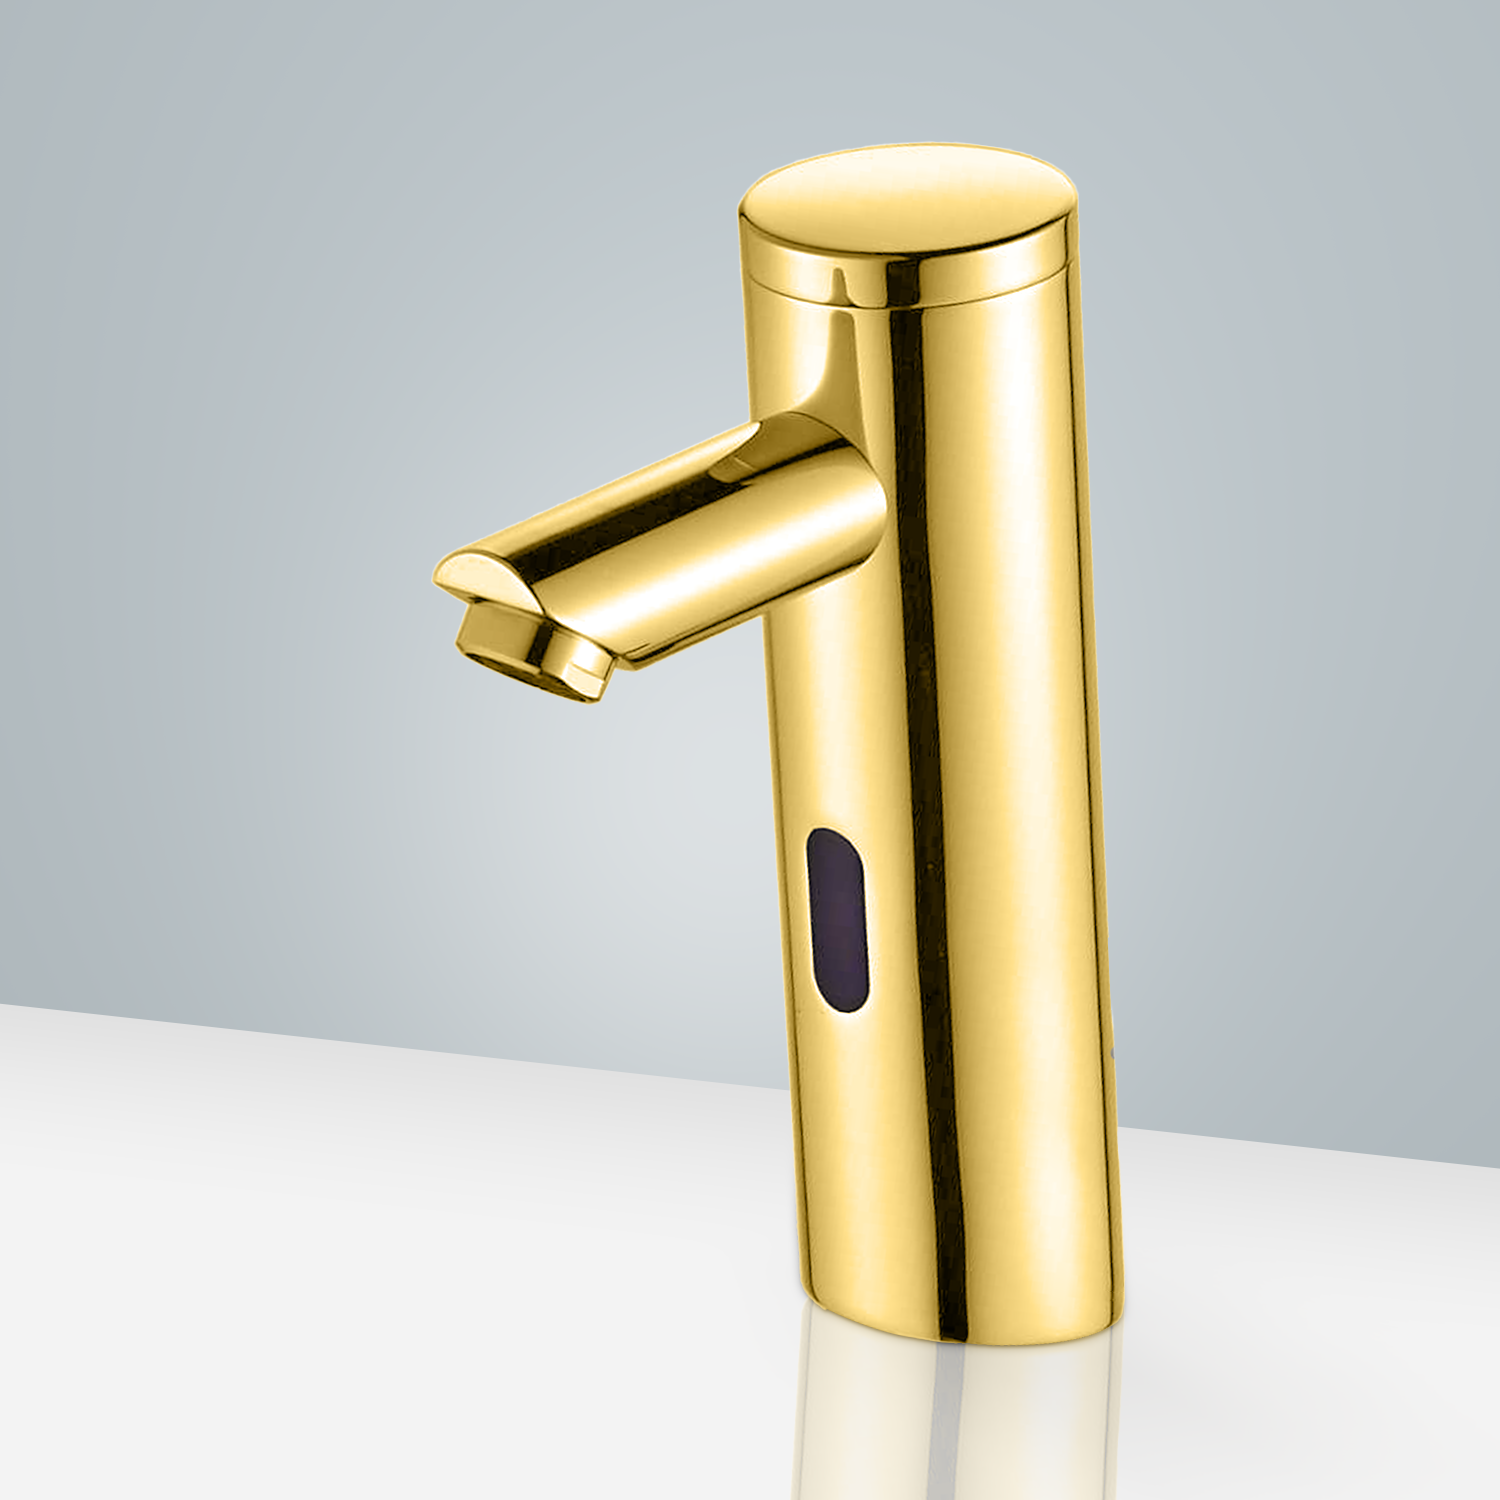 Fontana Commercial Gold Platinum Thermostatic Sensor Faucet